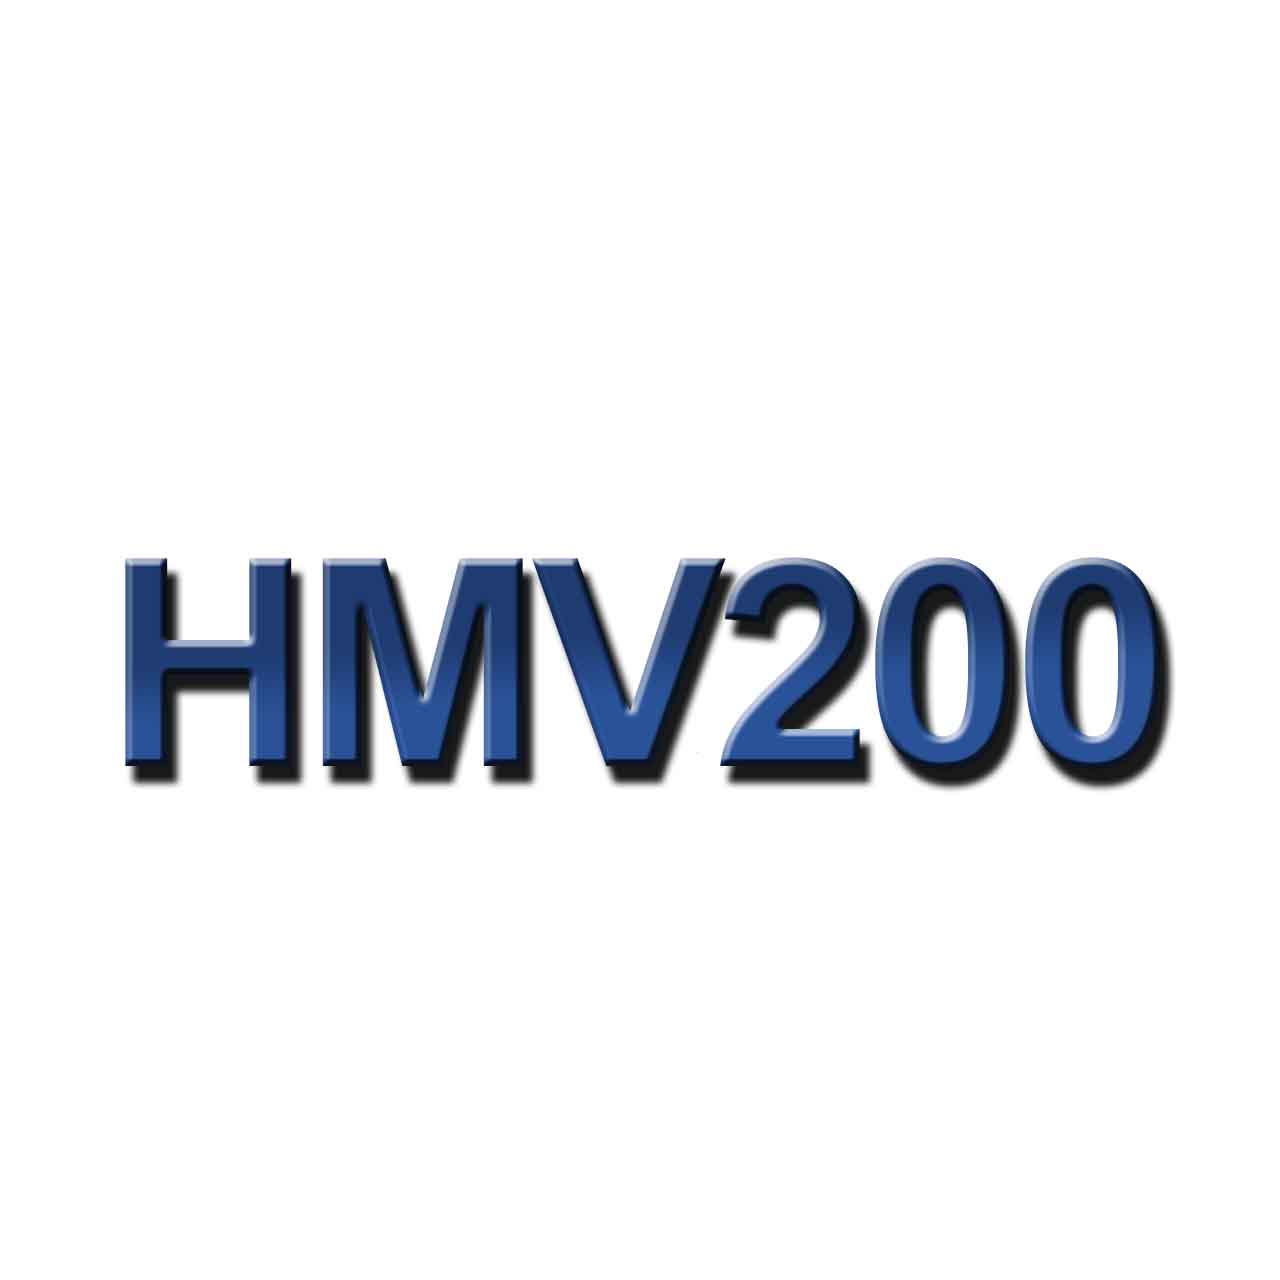 HMV200